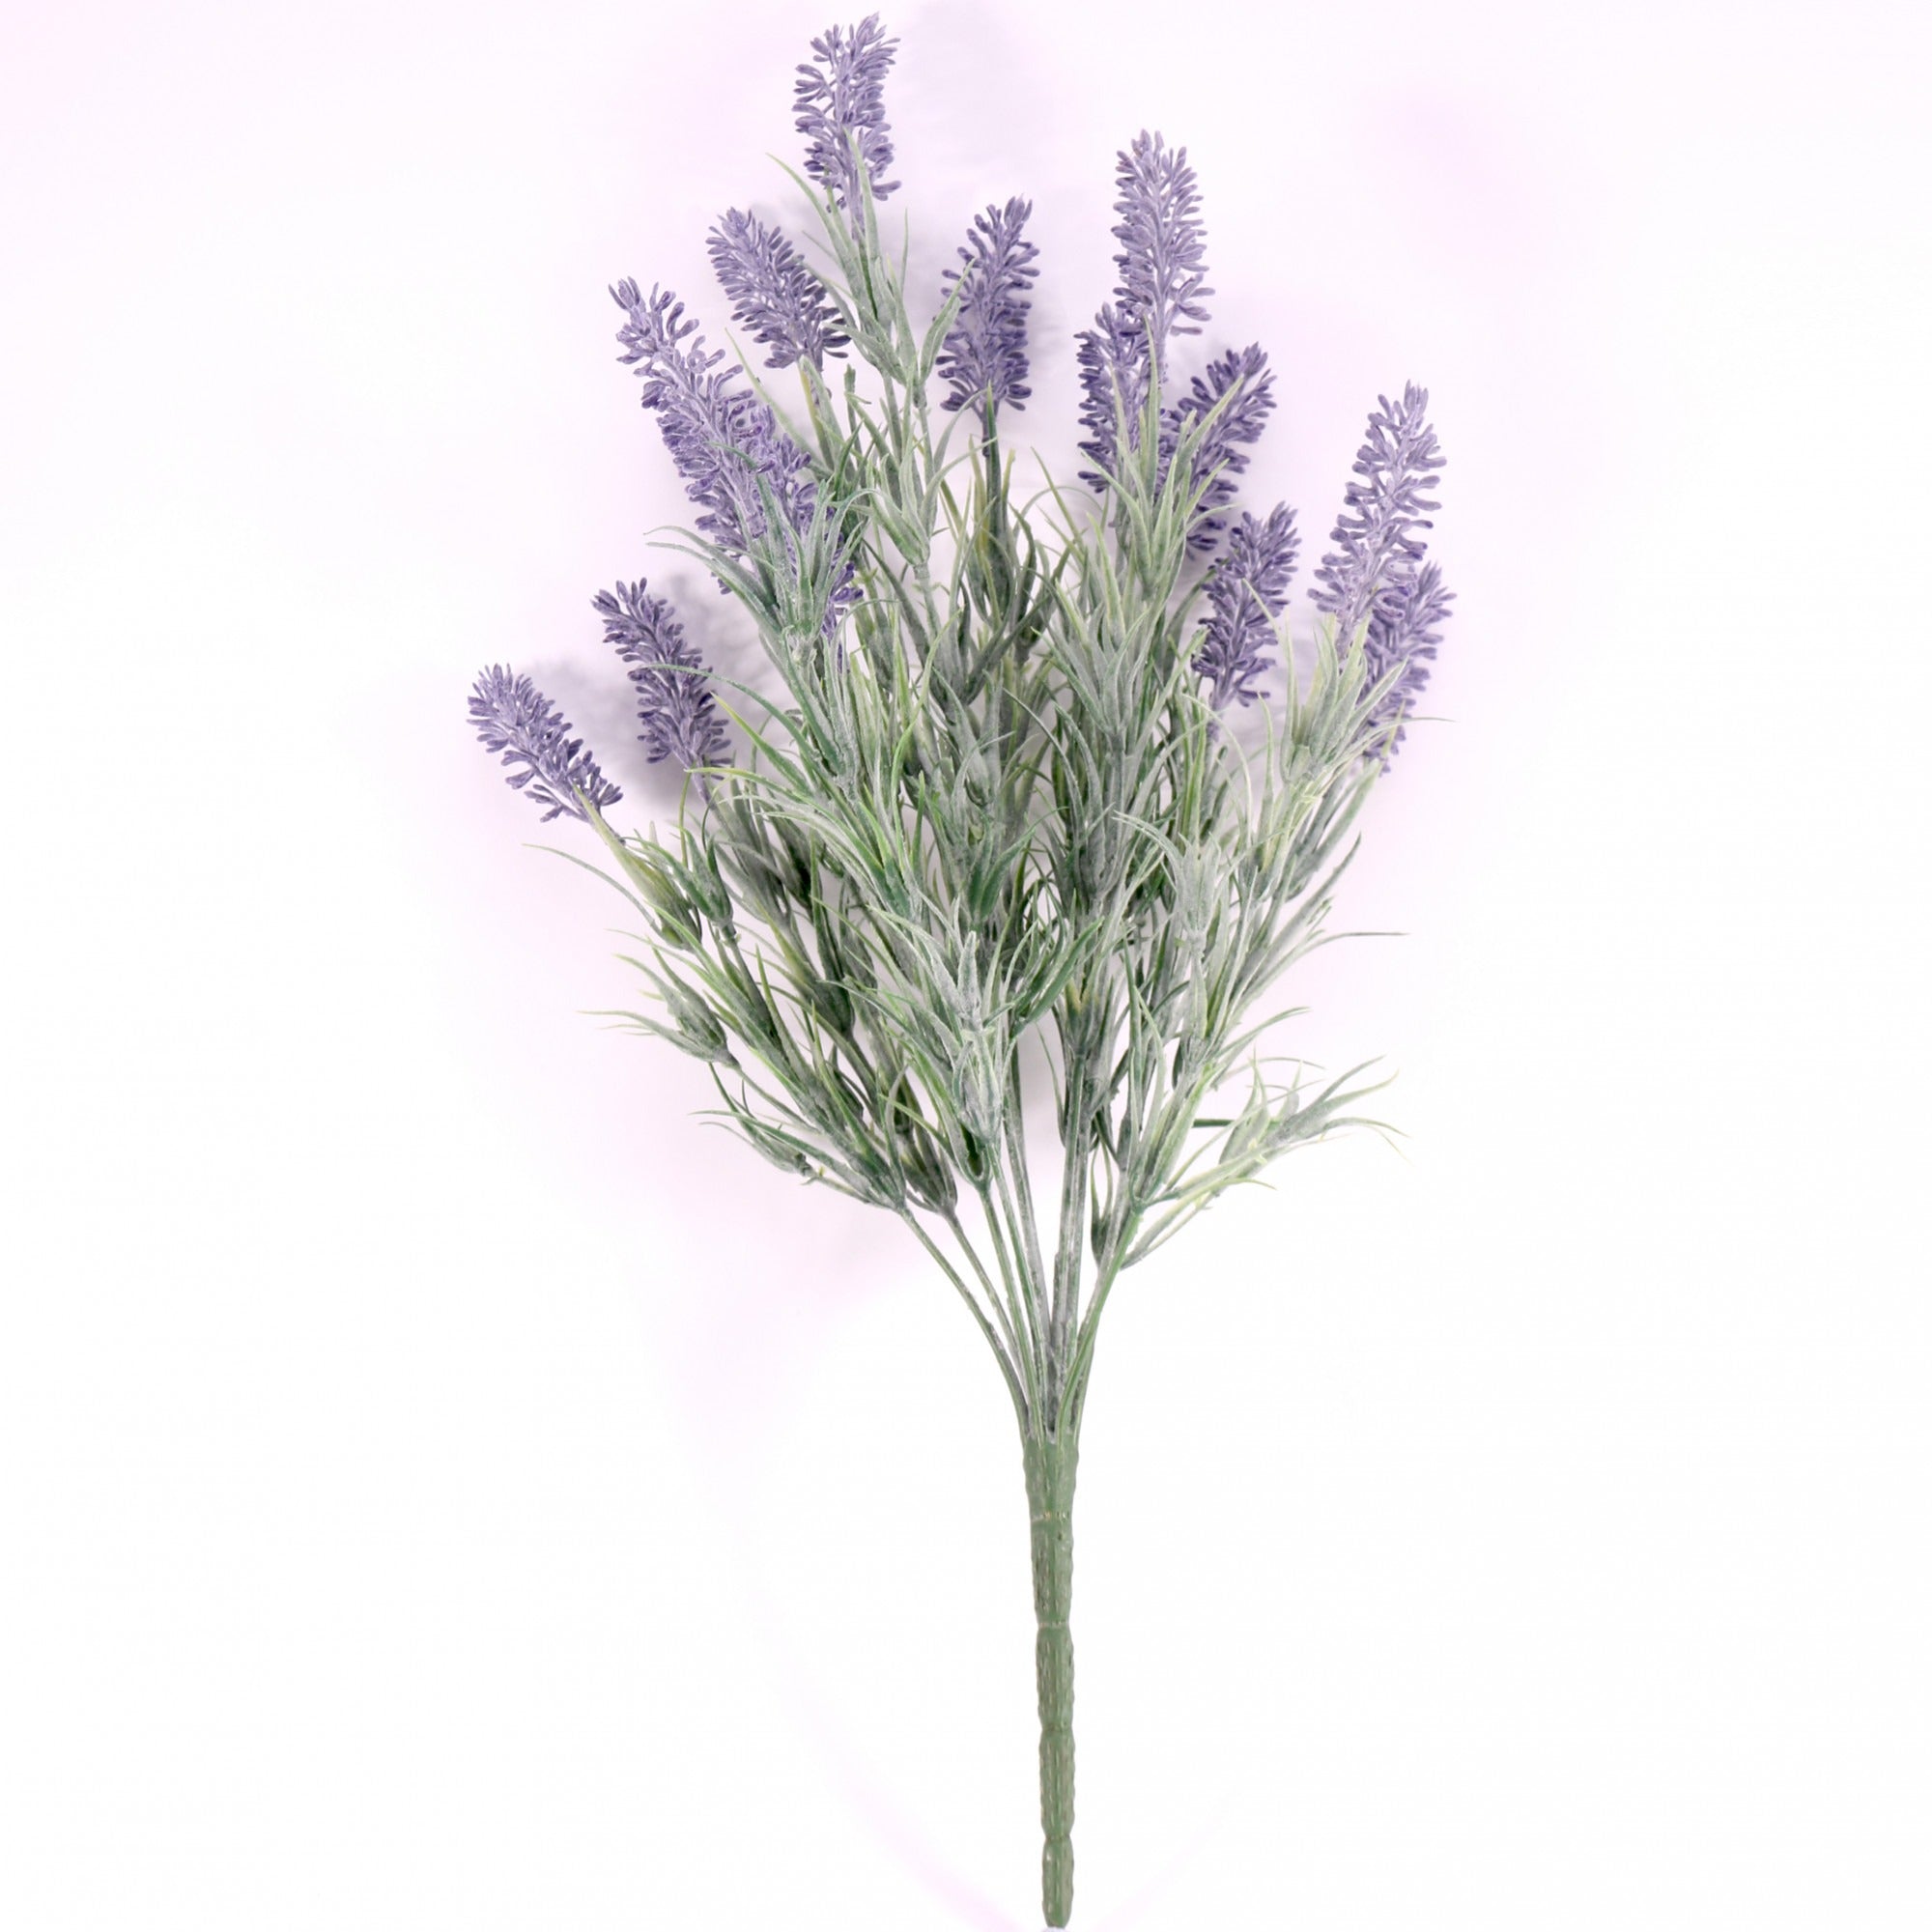 View Lavender Plant information